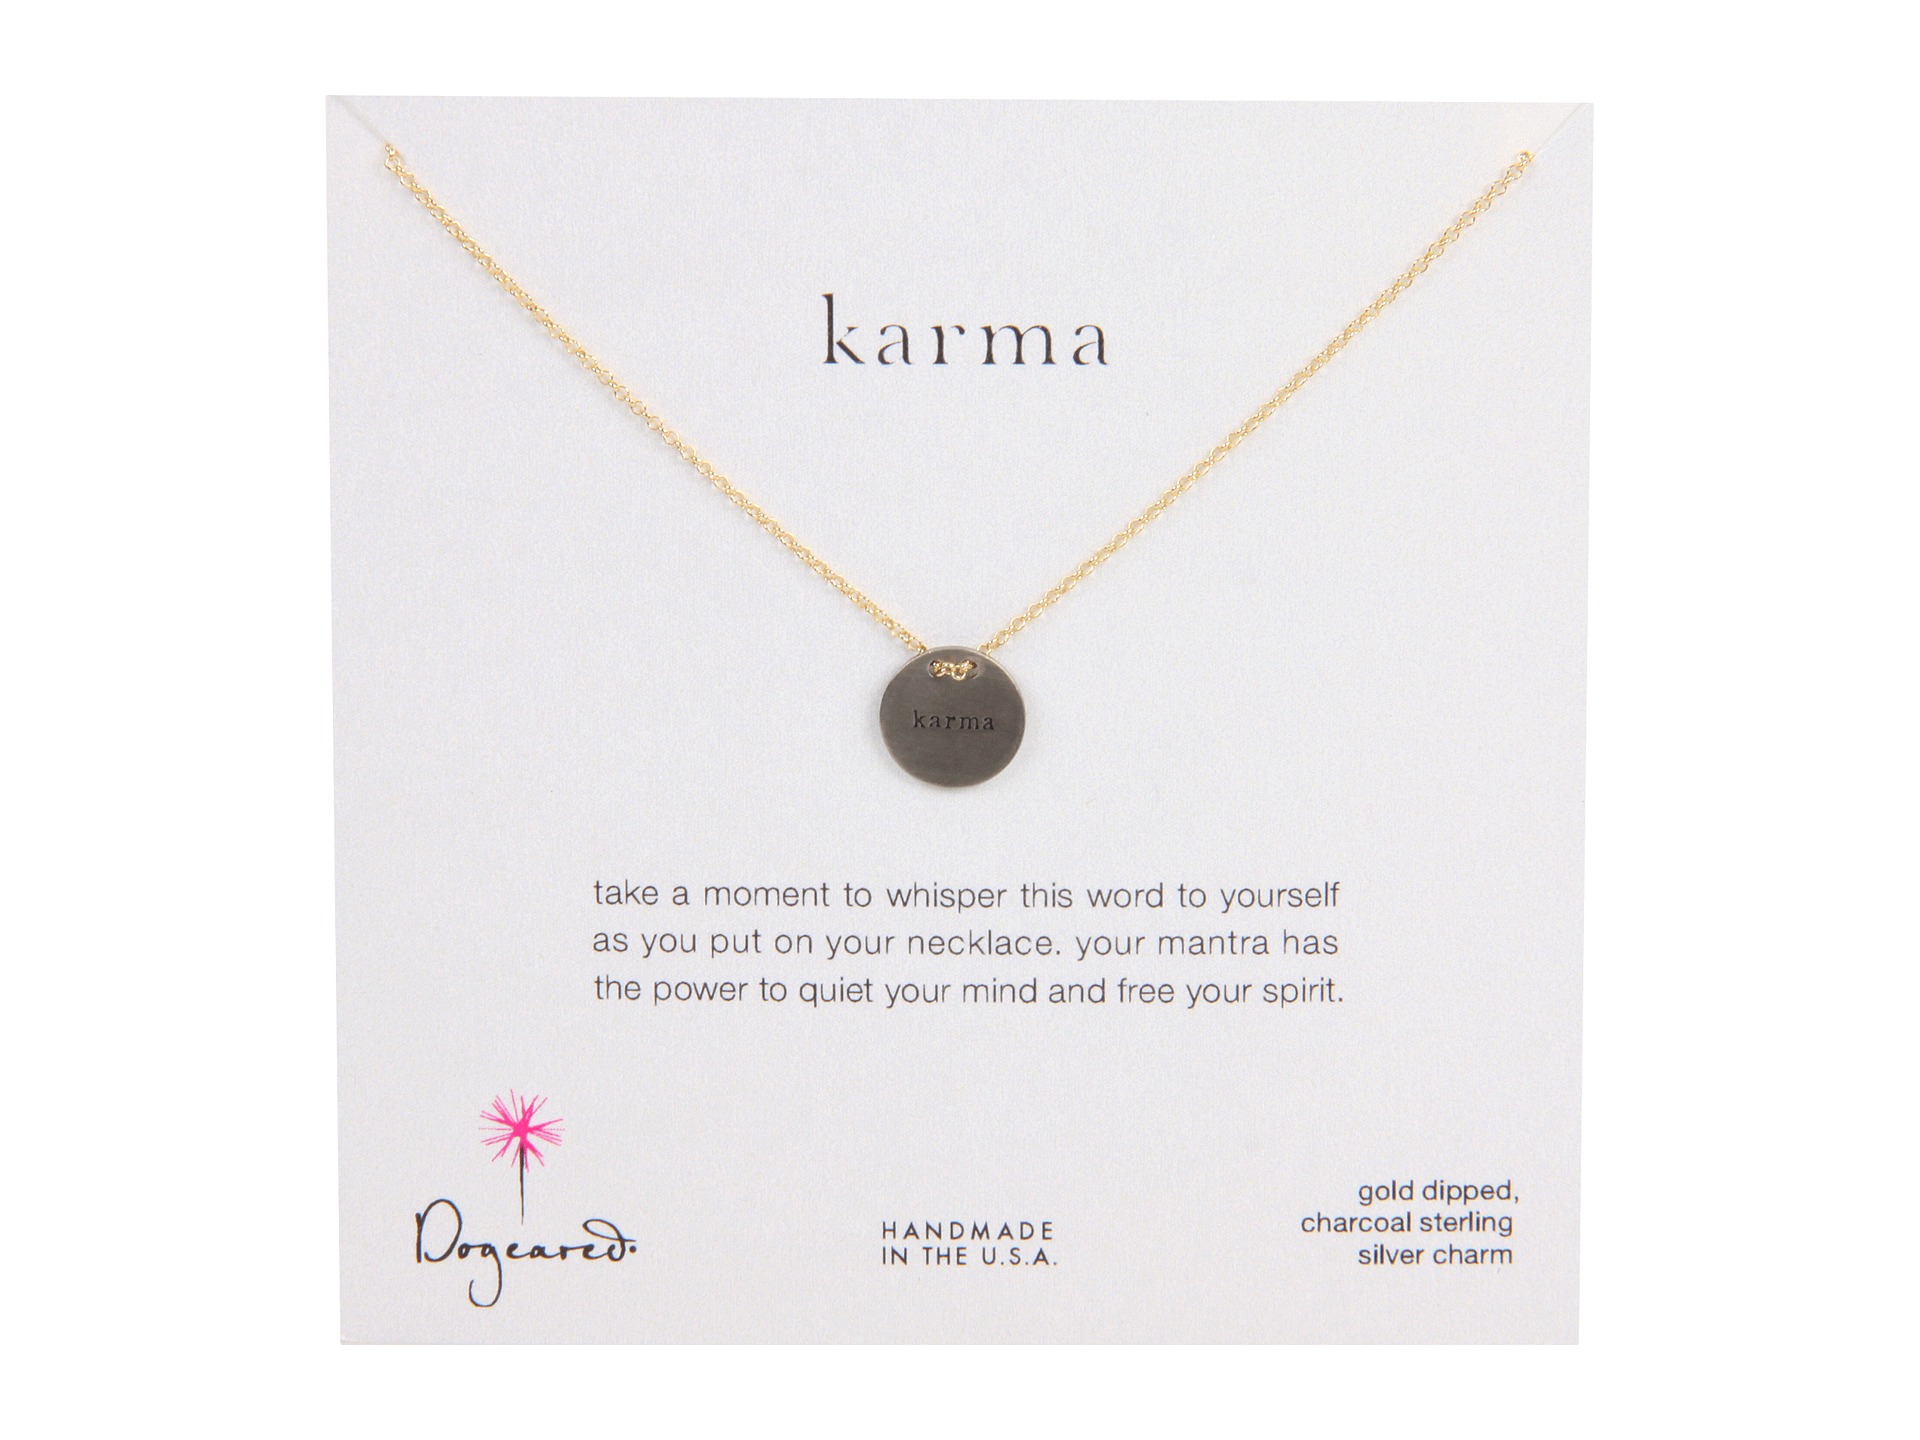 Dogeared Jewels Mantra Karma Necklace $60.99 $68.00 SALE